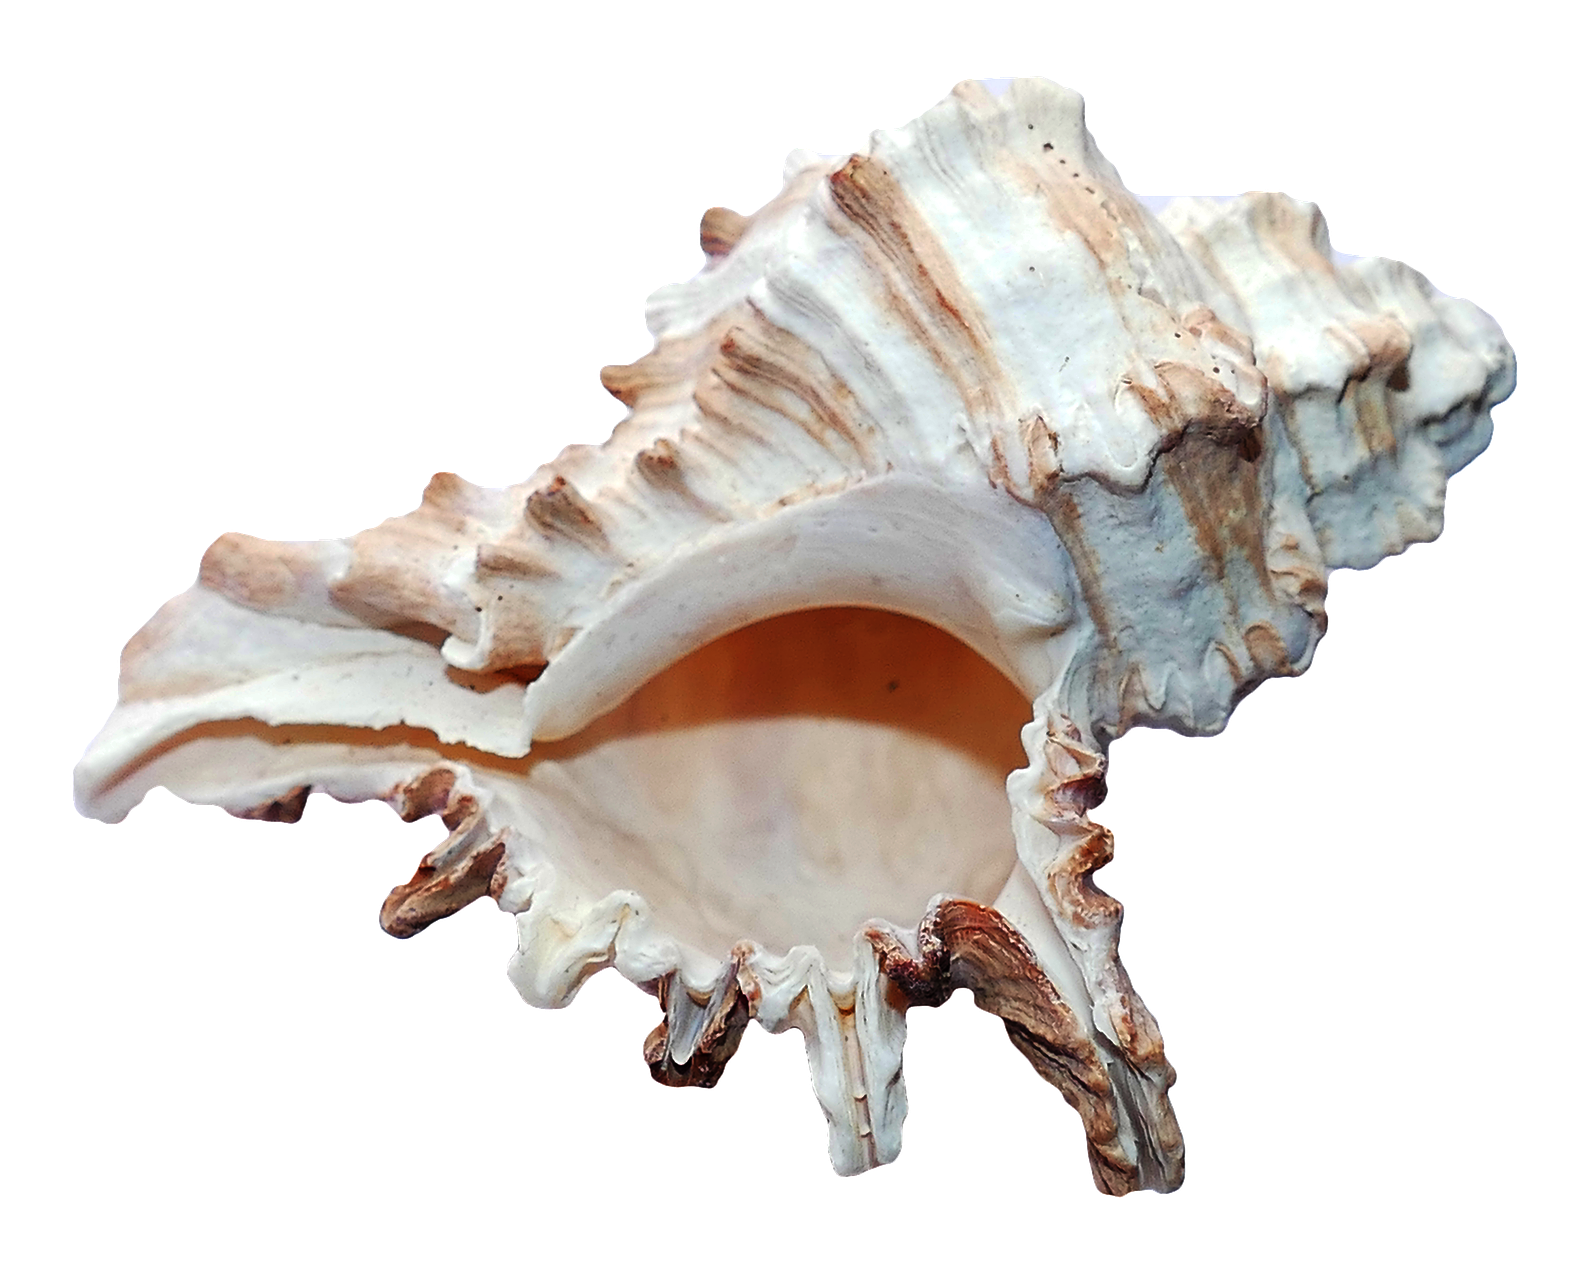 A Close Up Of A Sea Shell